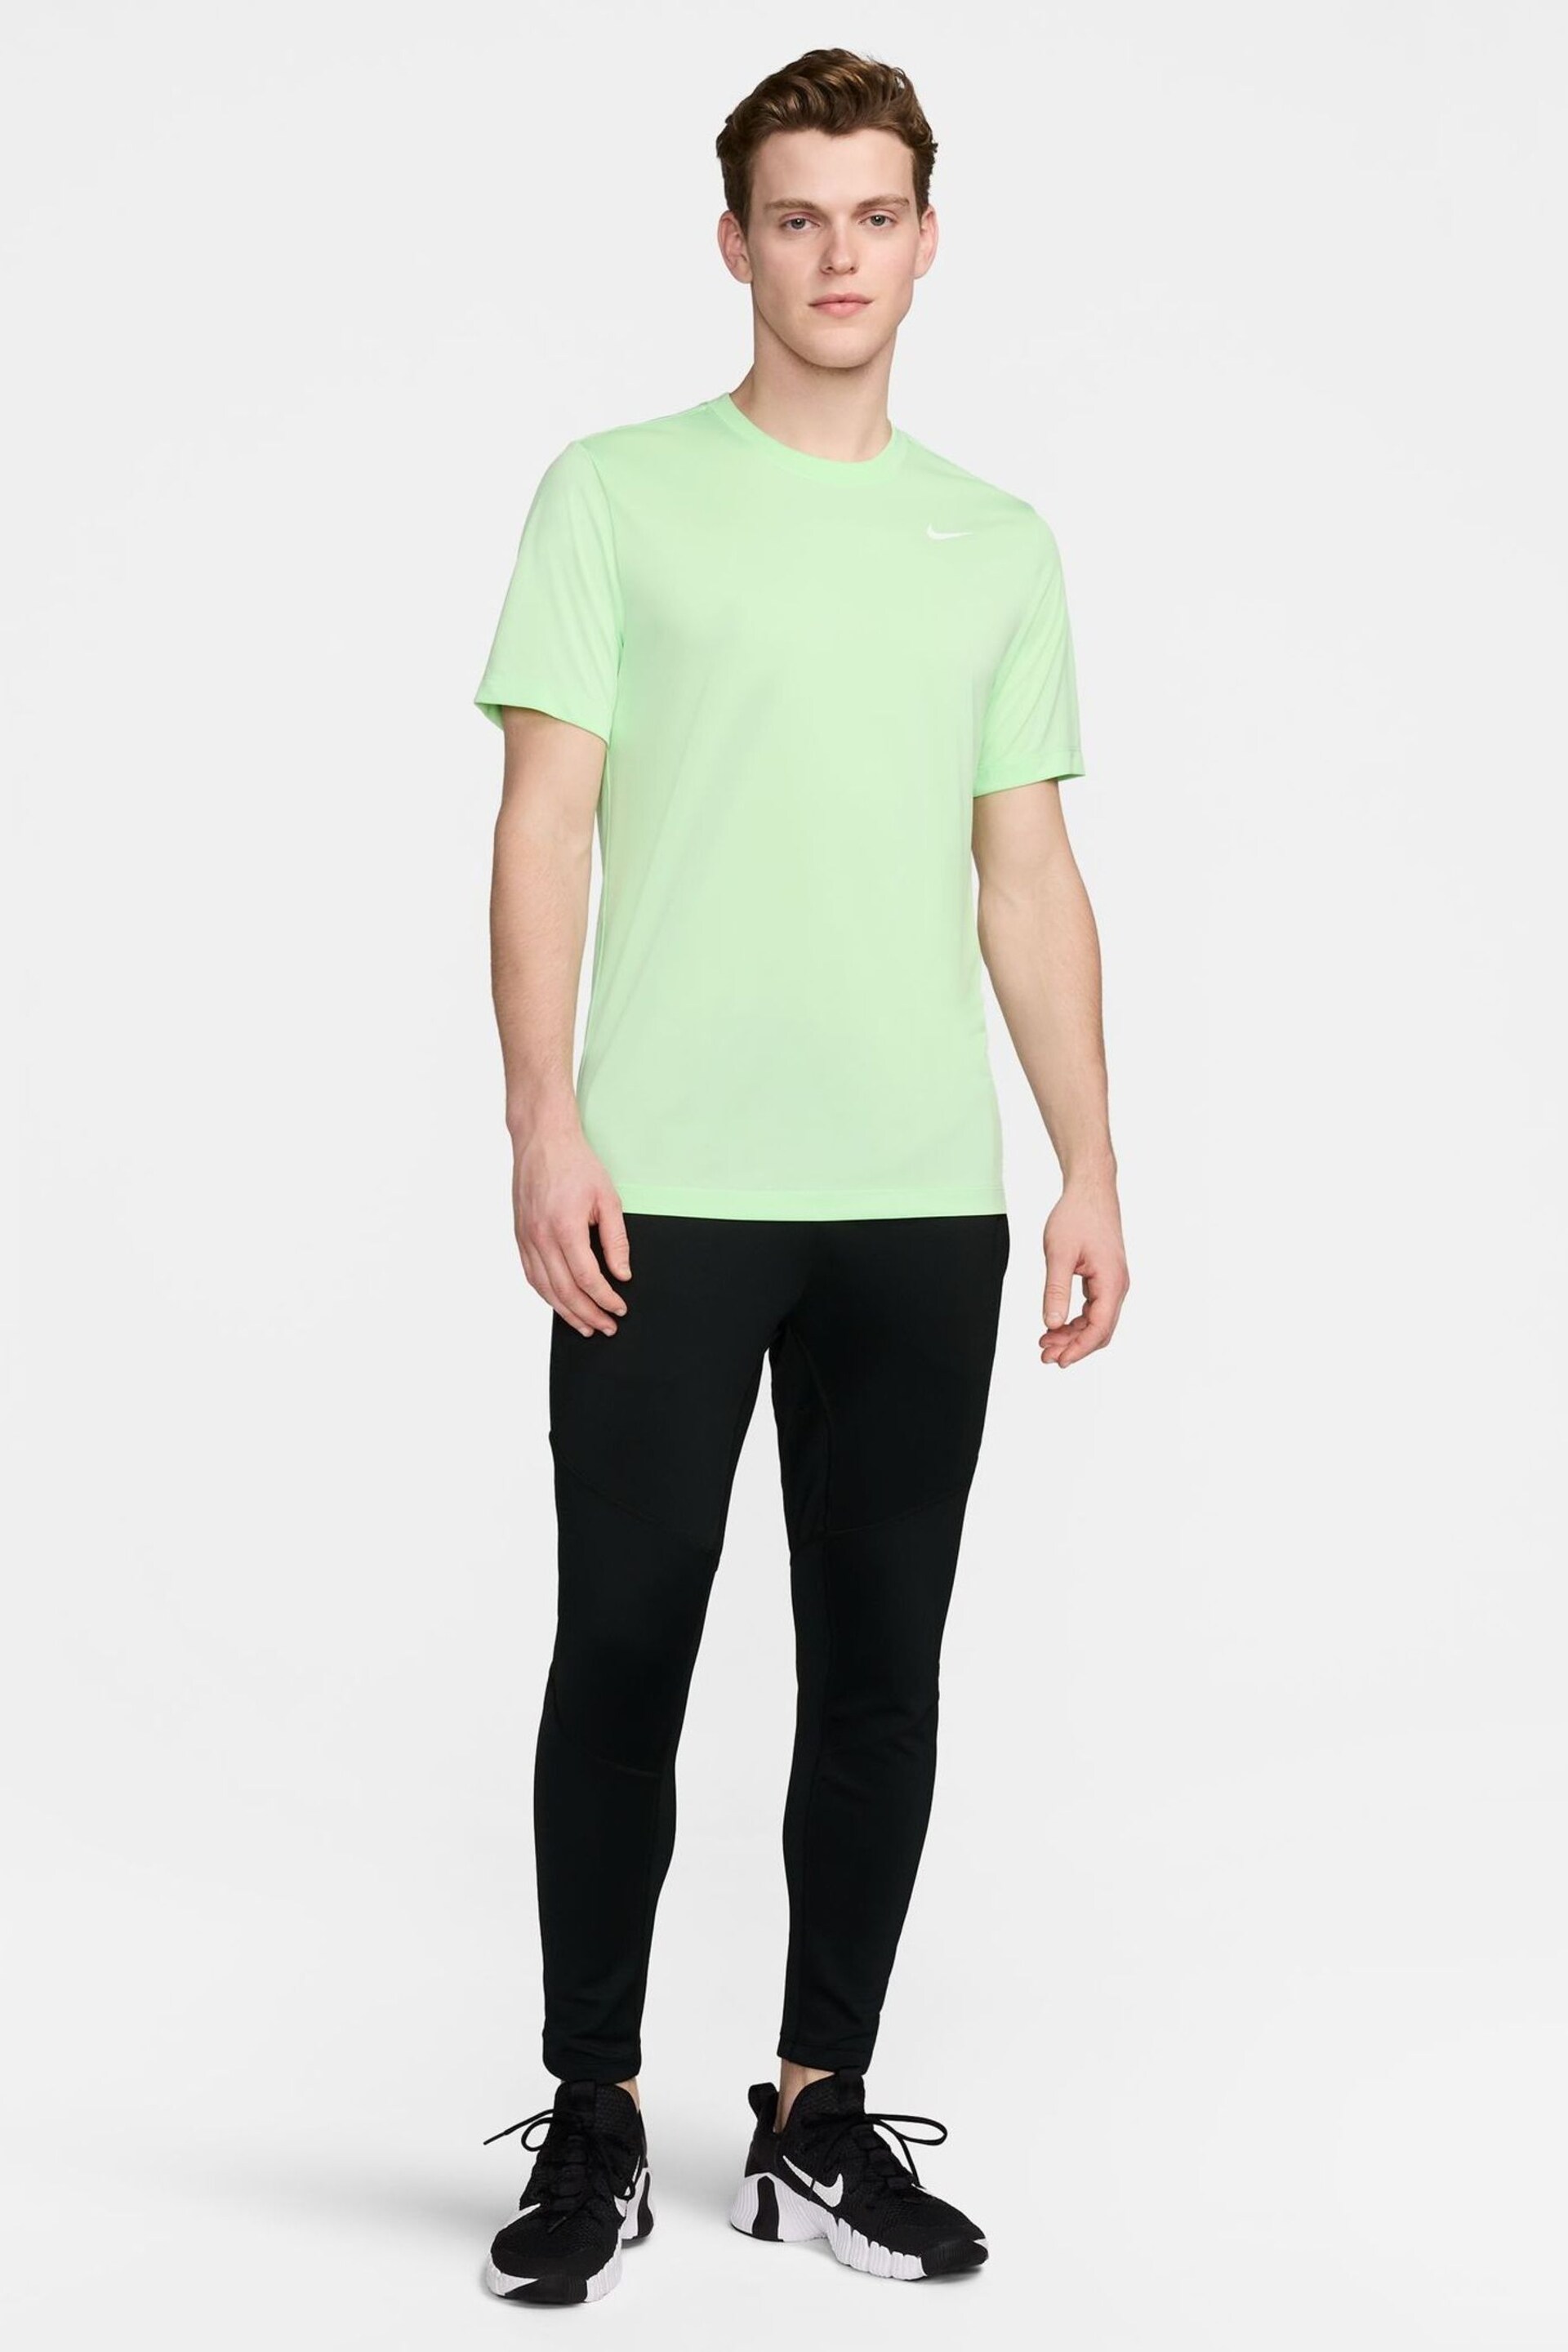 Nike Light Green Dri-FIT Legend Training T-Shirt - Image 4 of 4